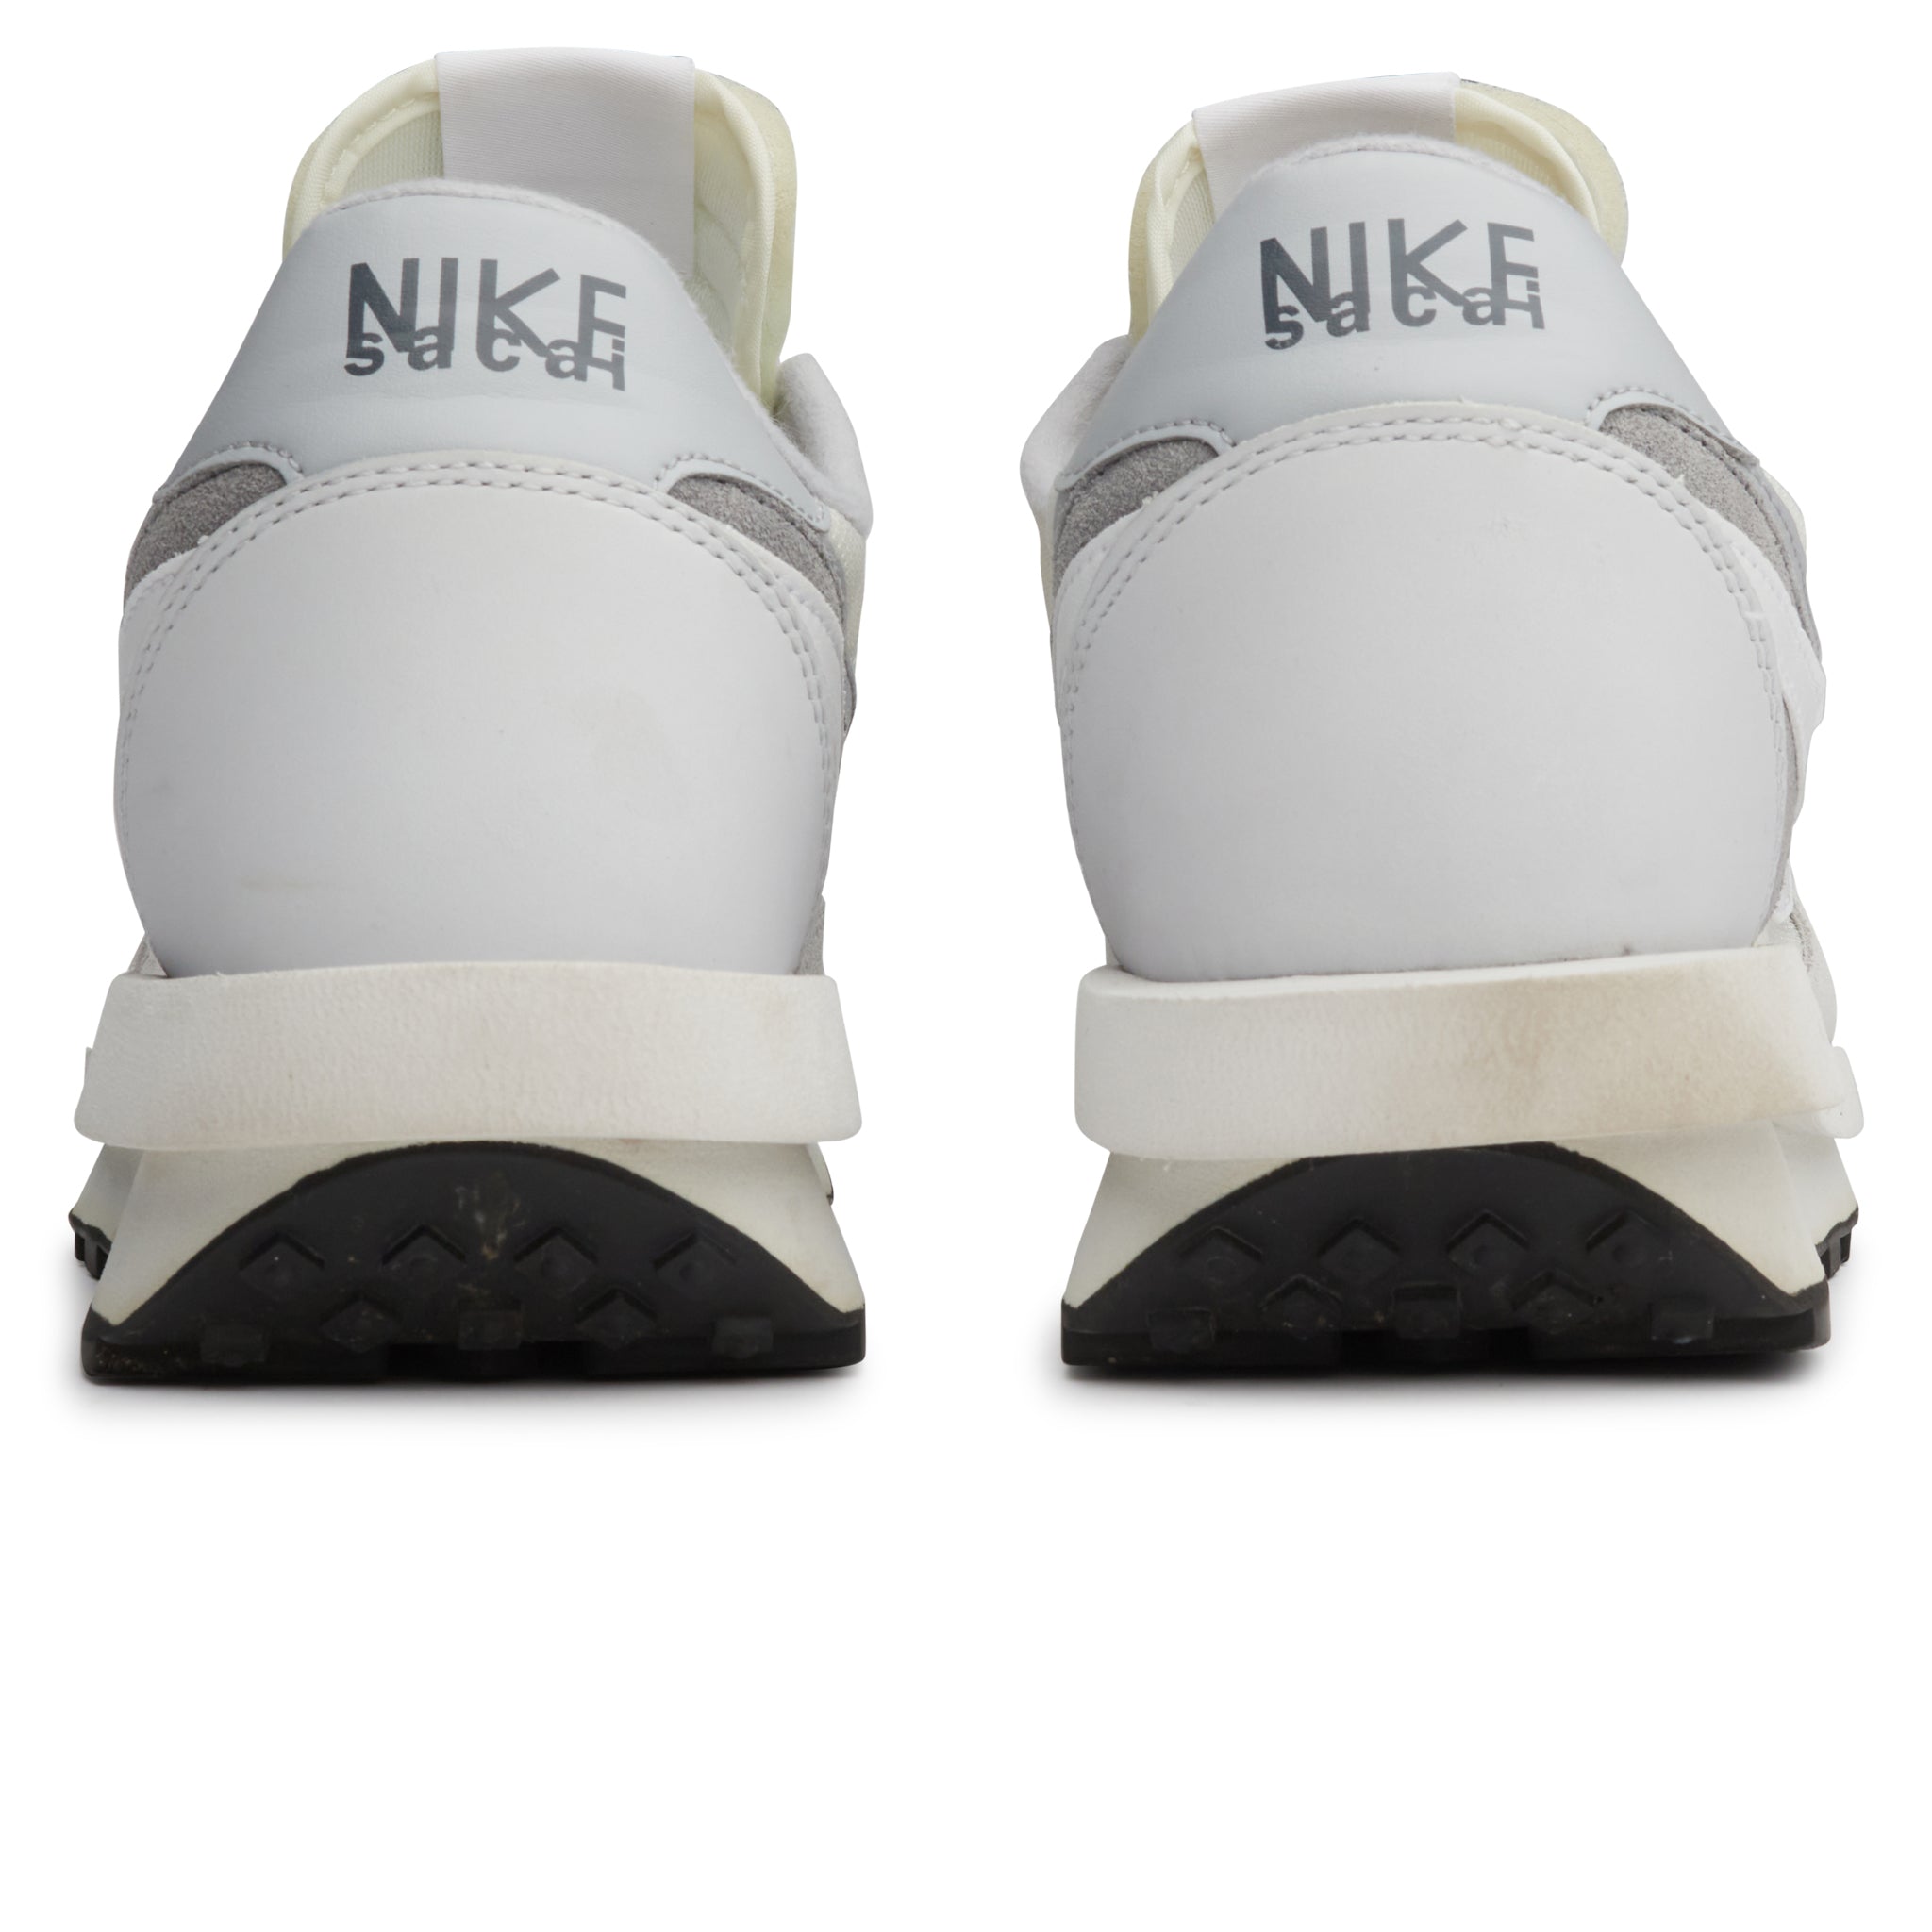 Image of Pre Owned - Nike x Sacai LD Waffle Summit White